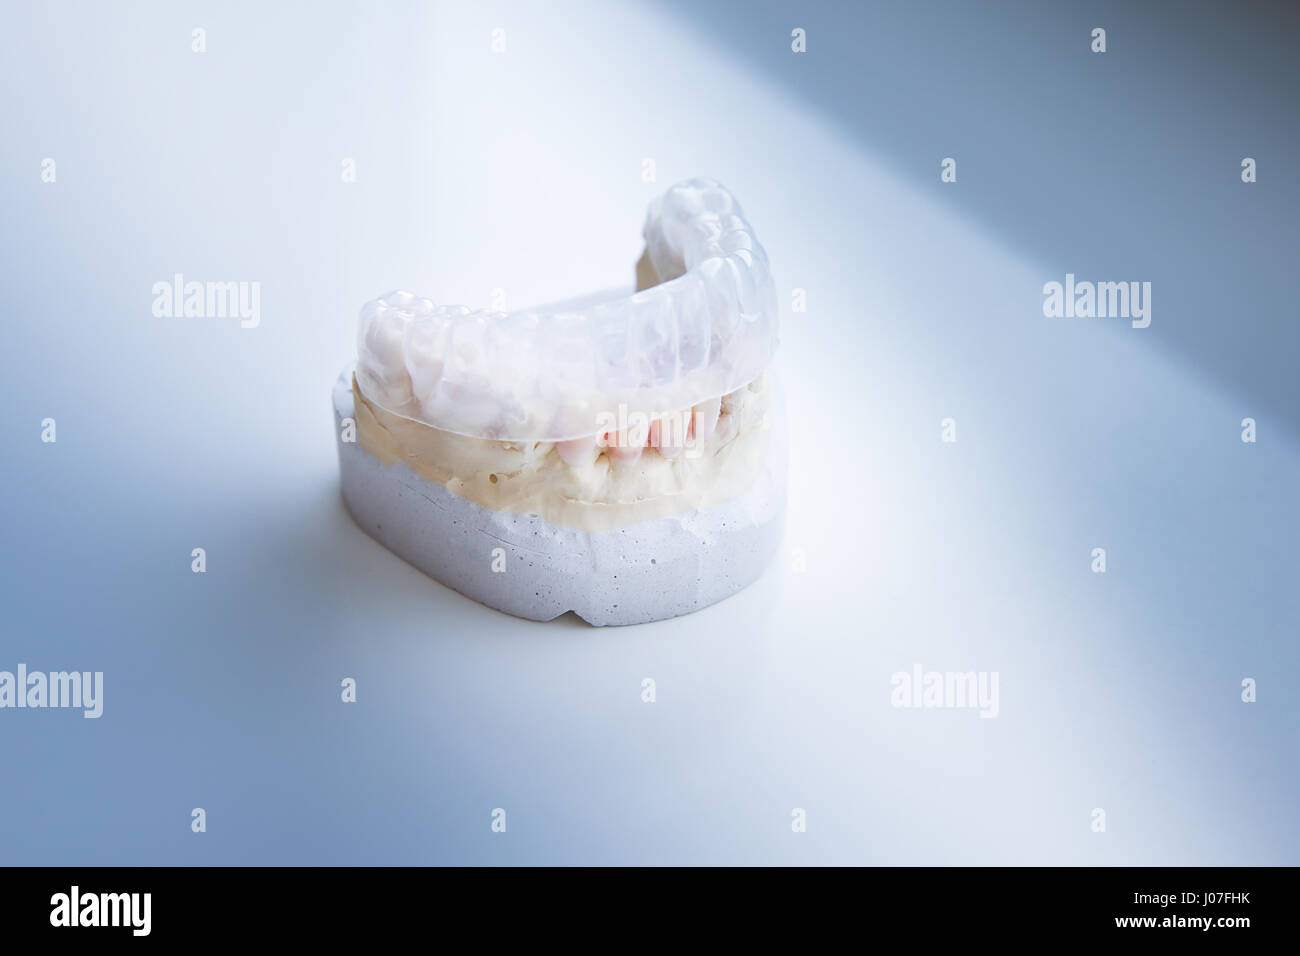 Invisalign, invisible plastic teeth aligner on a dental plaster mold Stock Photo